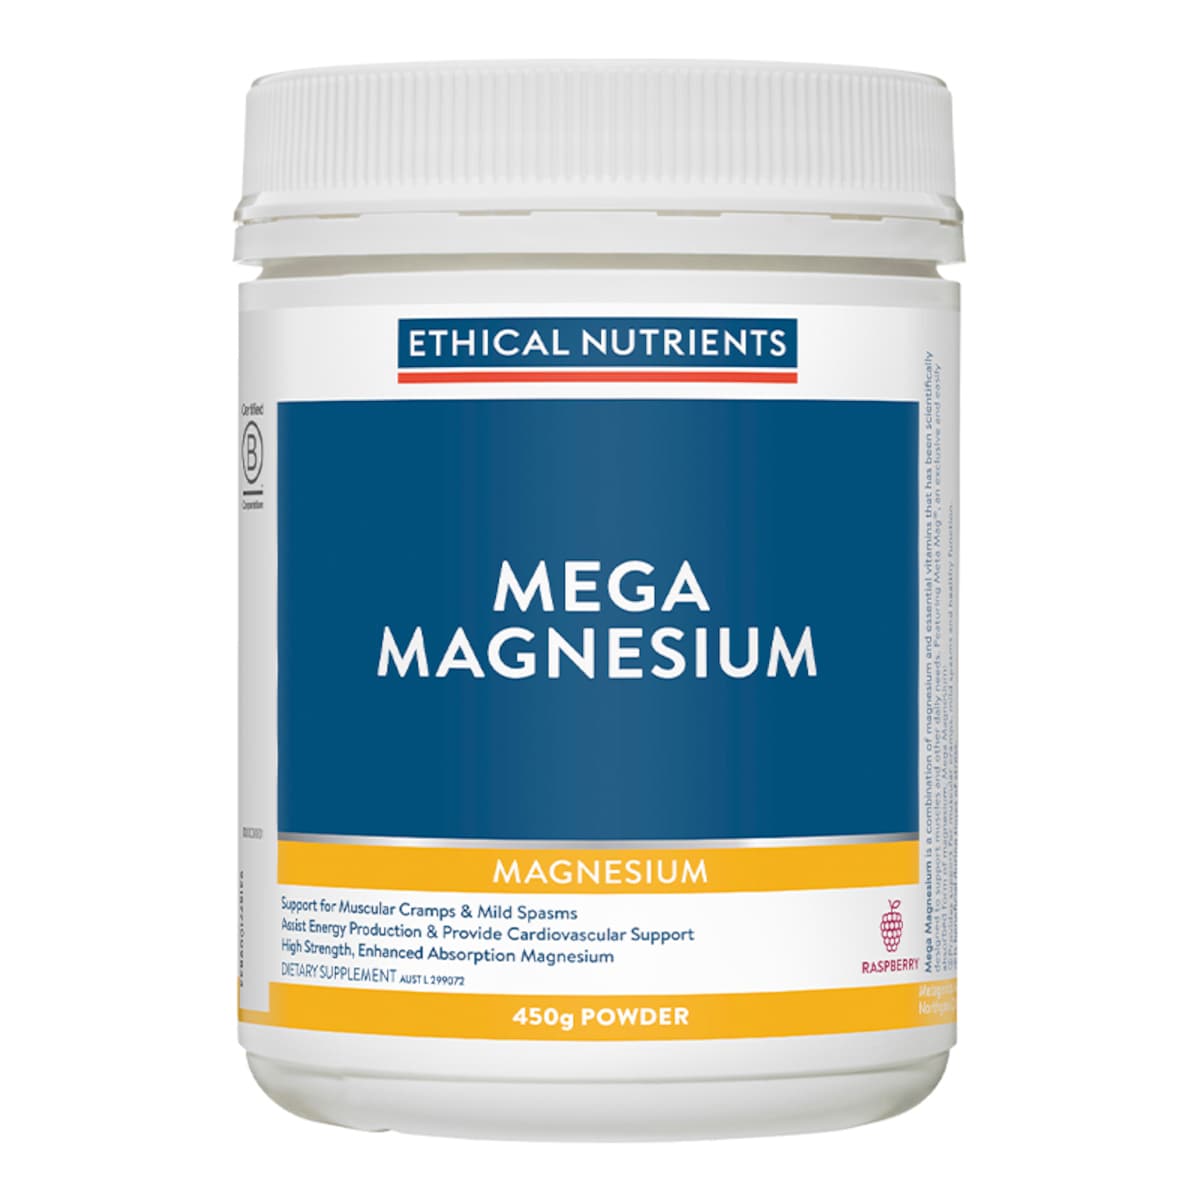 Ethical Nutrients Mega Magnesium Raspberry 450g Powder